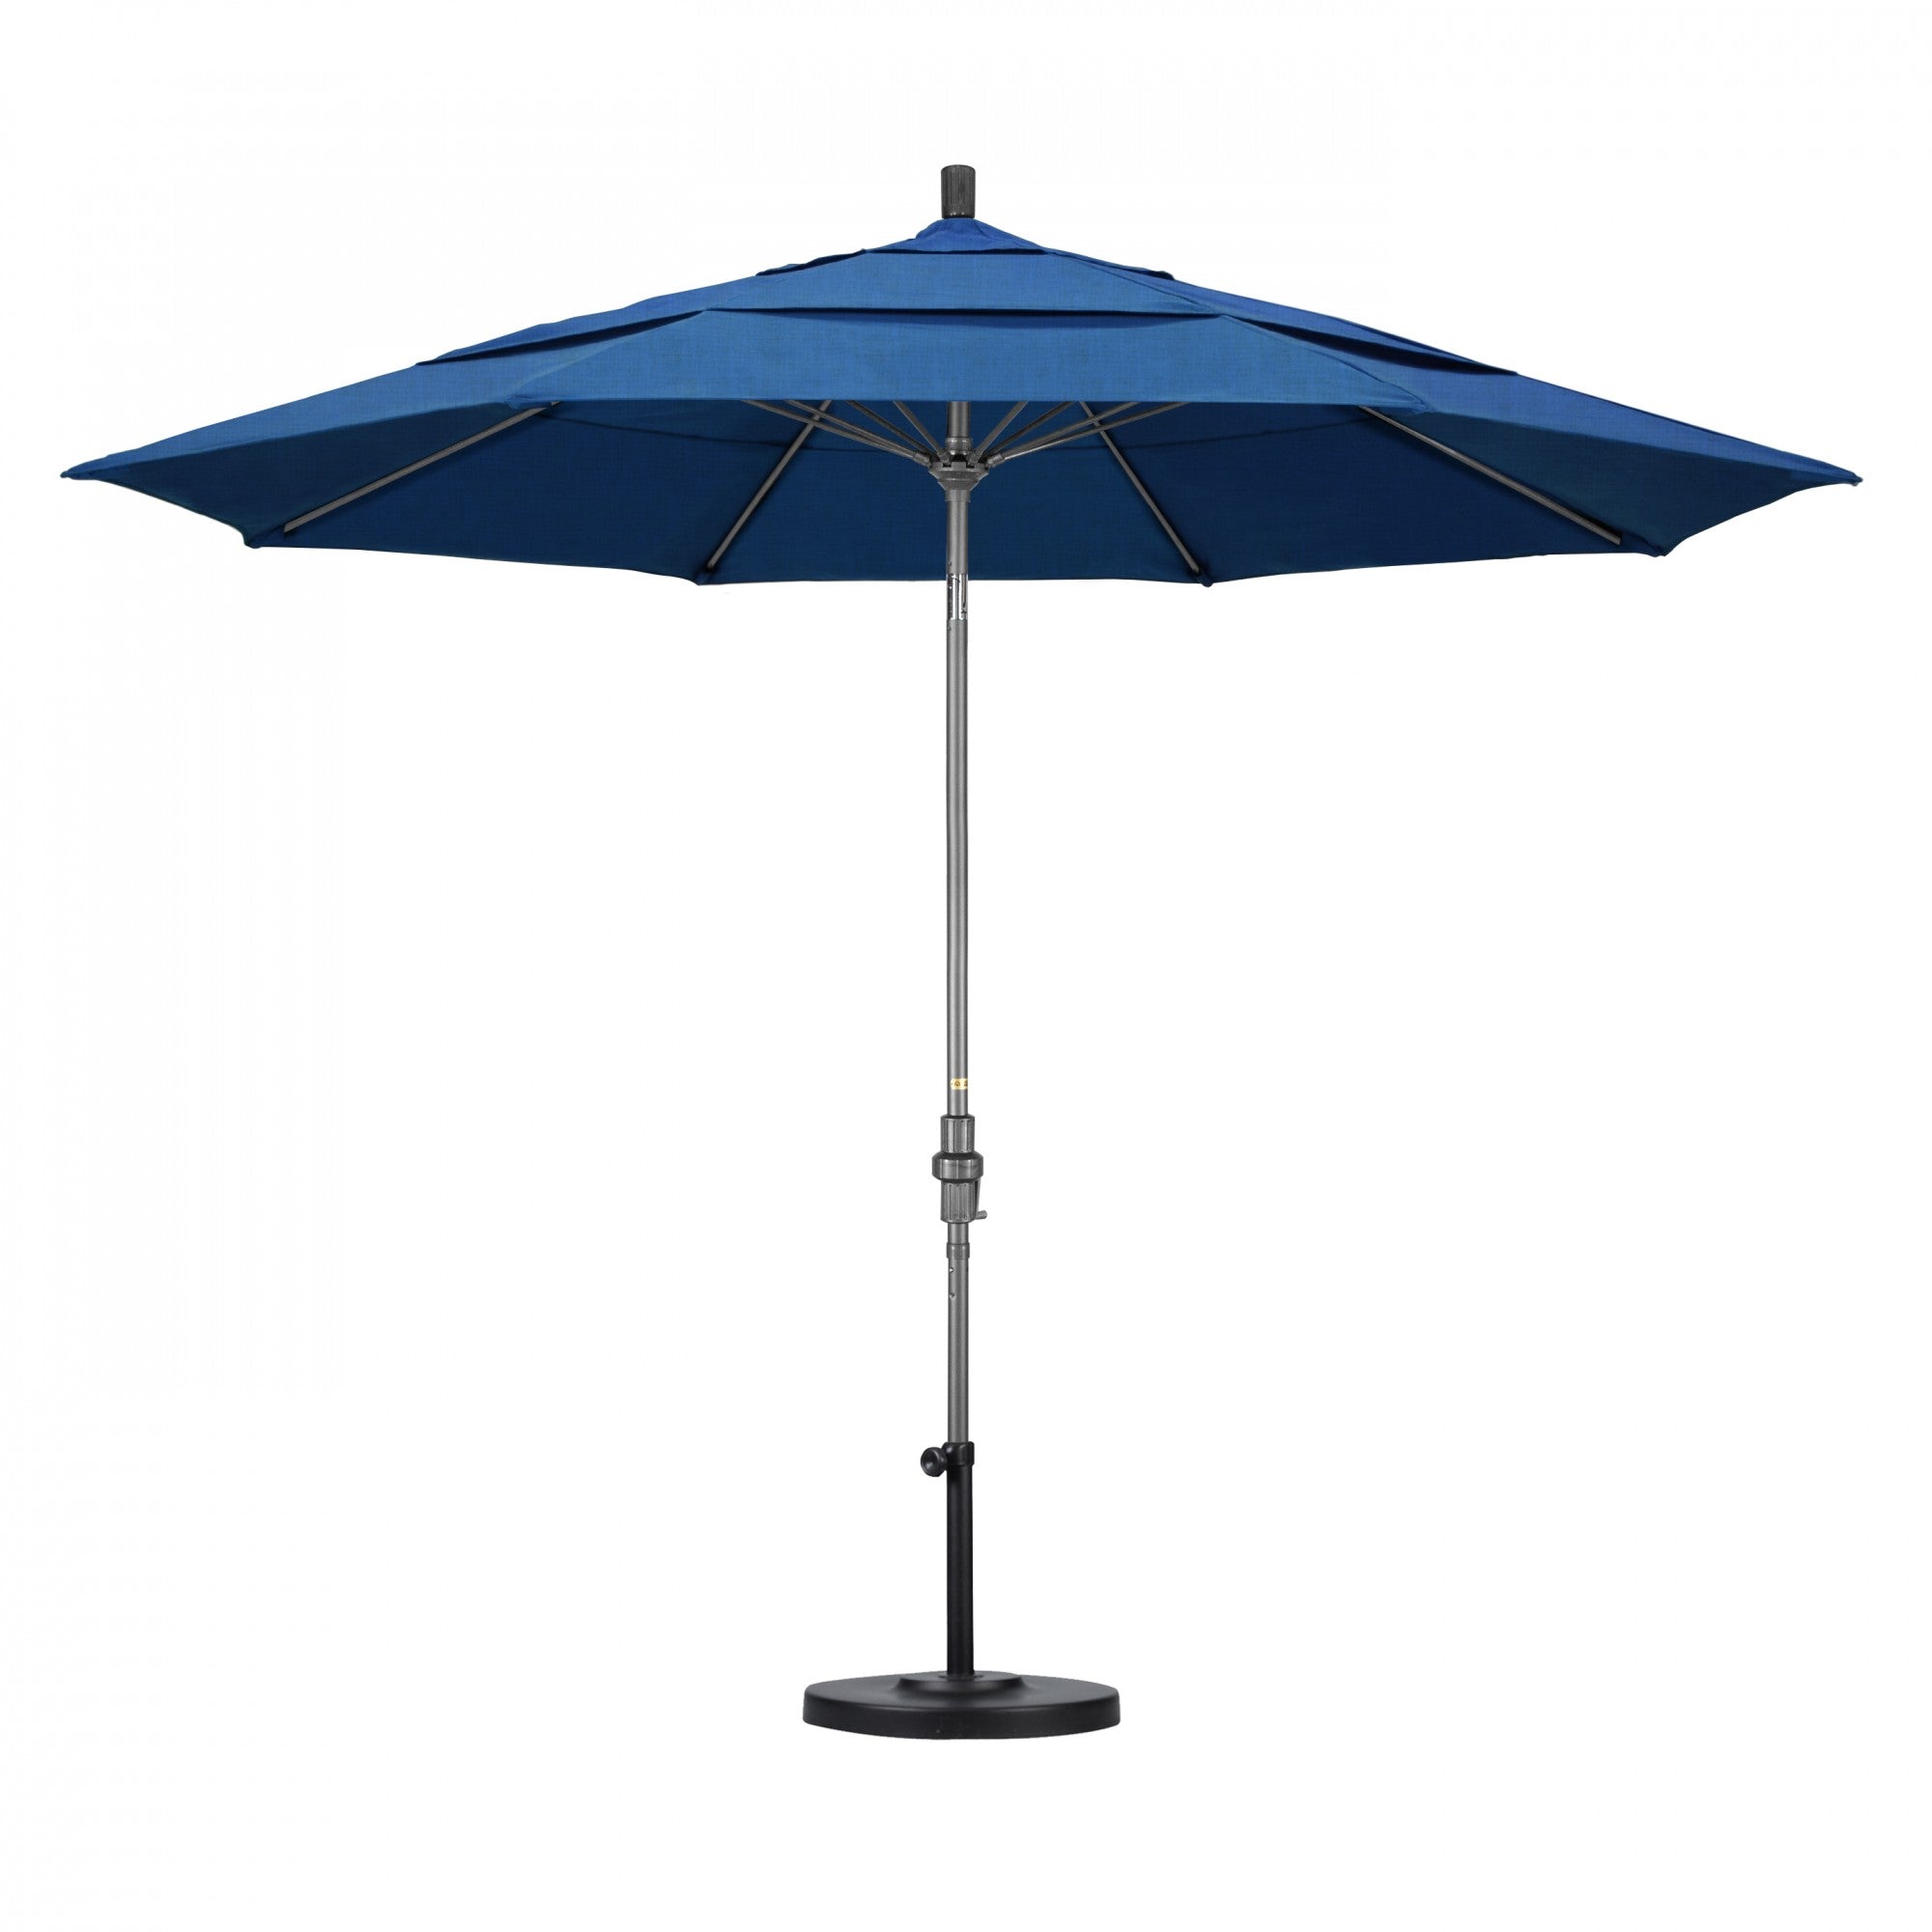 California Umbrella - 11' - Patio Umbrella Umbrella - Aluminum Pole - Regatta - Sunbrella  - GSCUF118010-5493-DWV